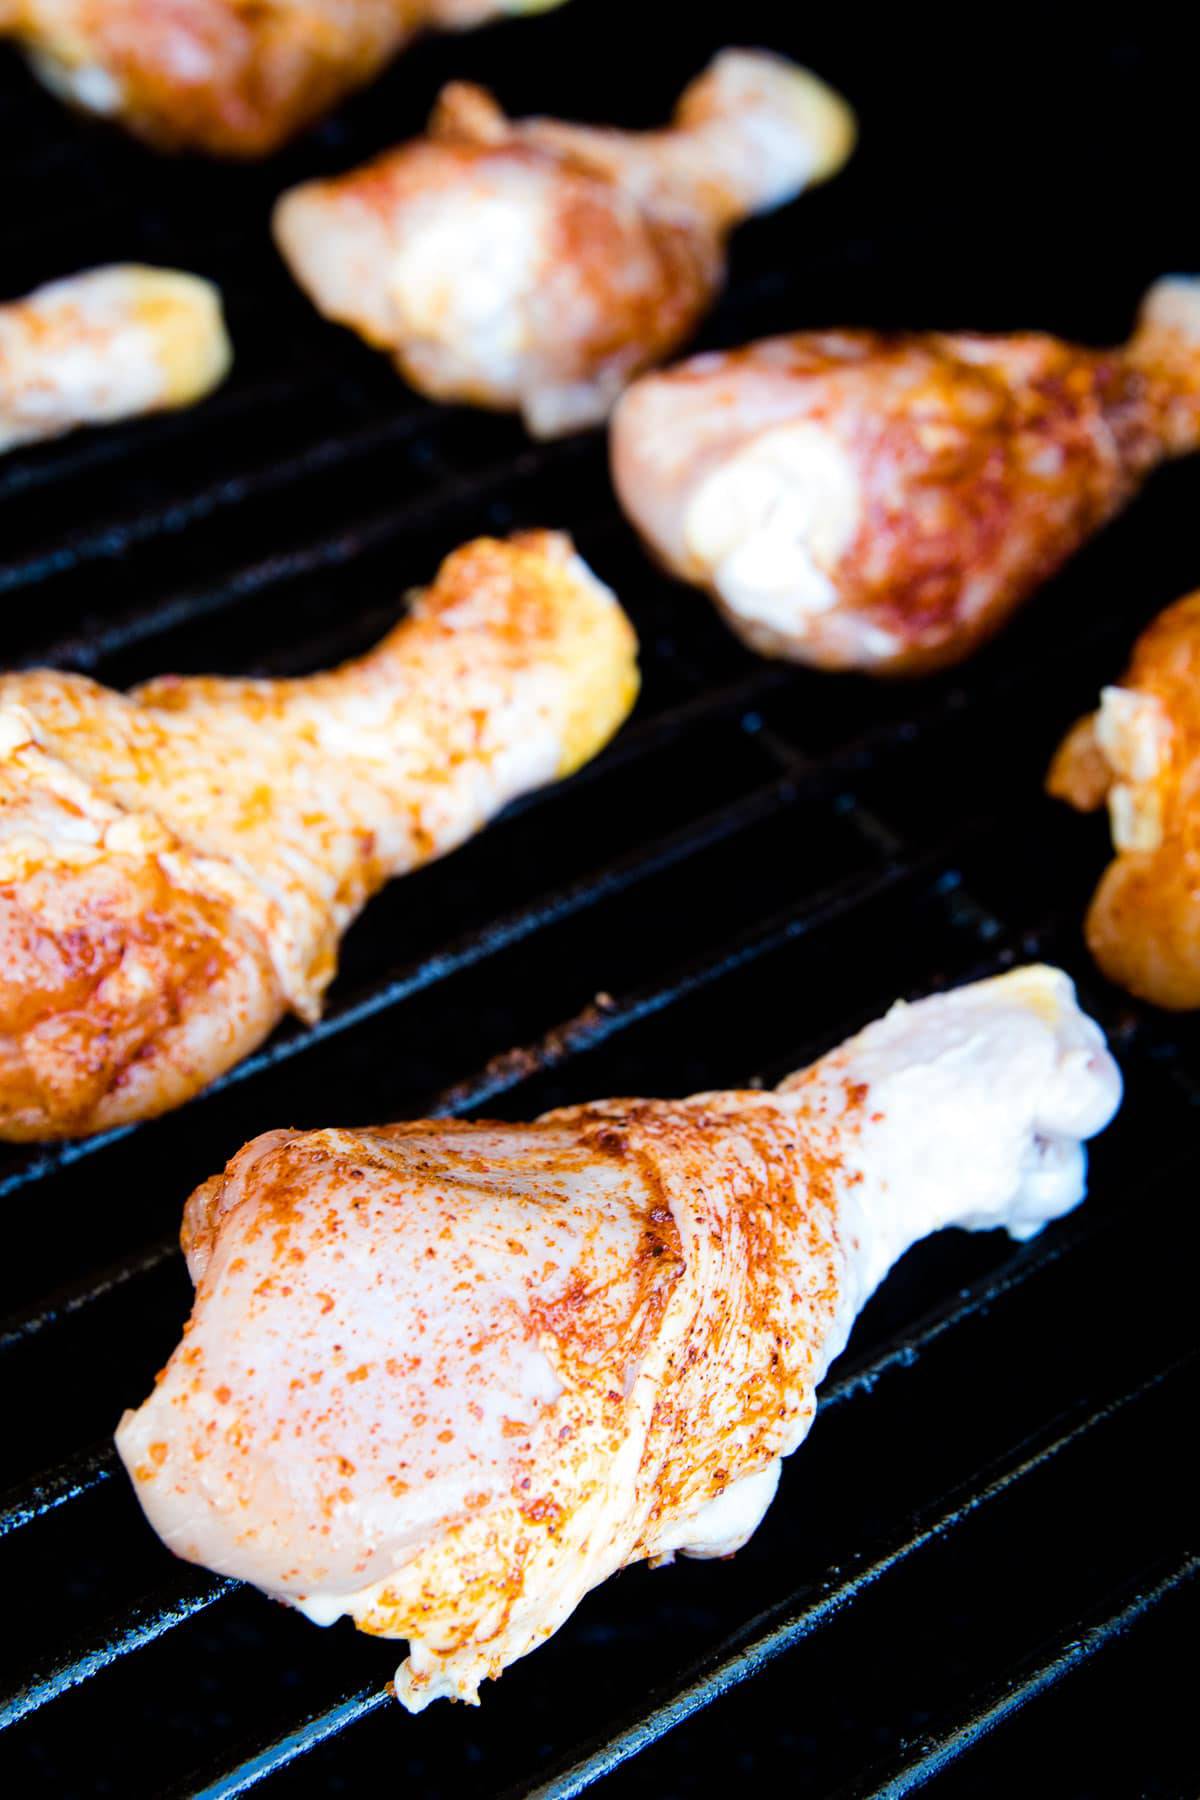 Seasoned chicken legs on smoker grates